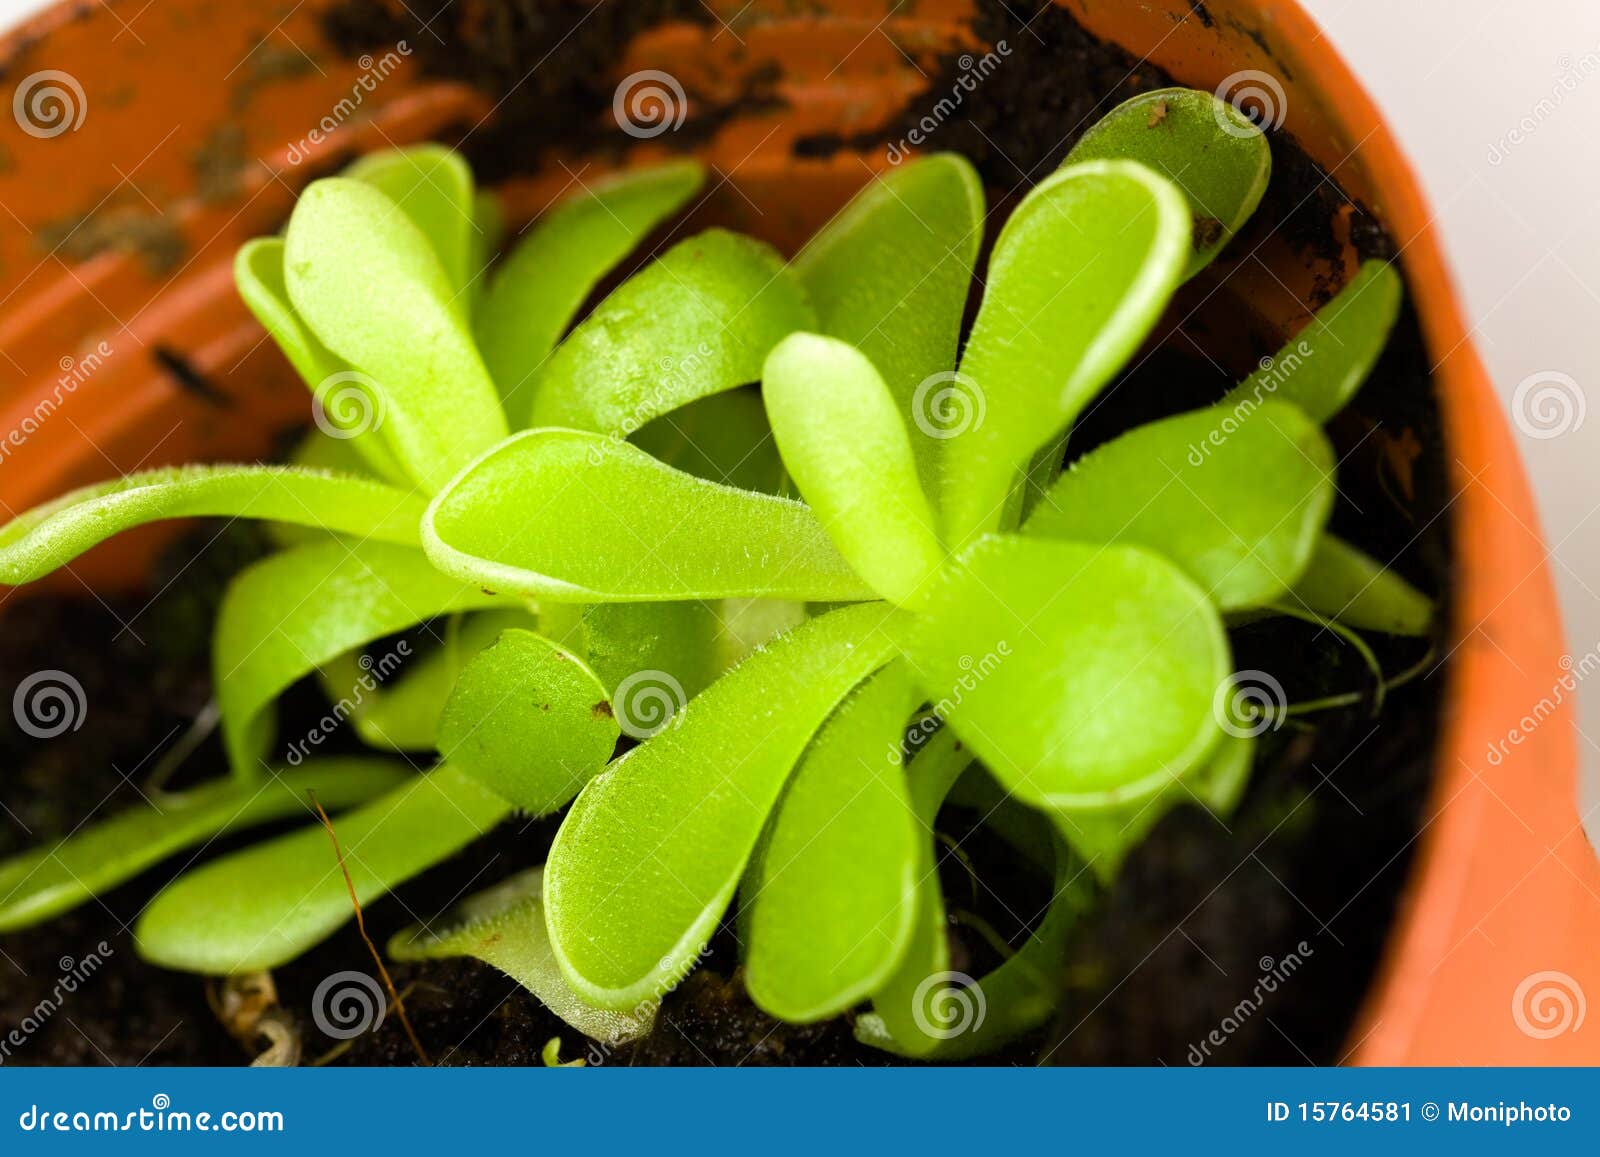 pinguicula sethos , a exotic,carnivorous plant